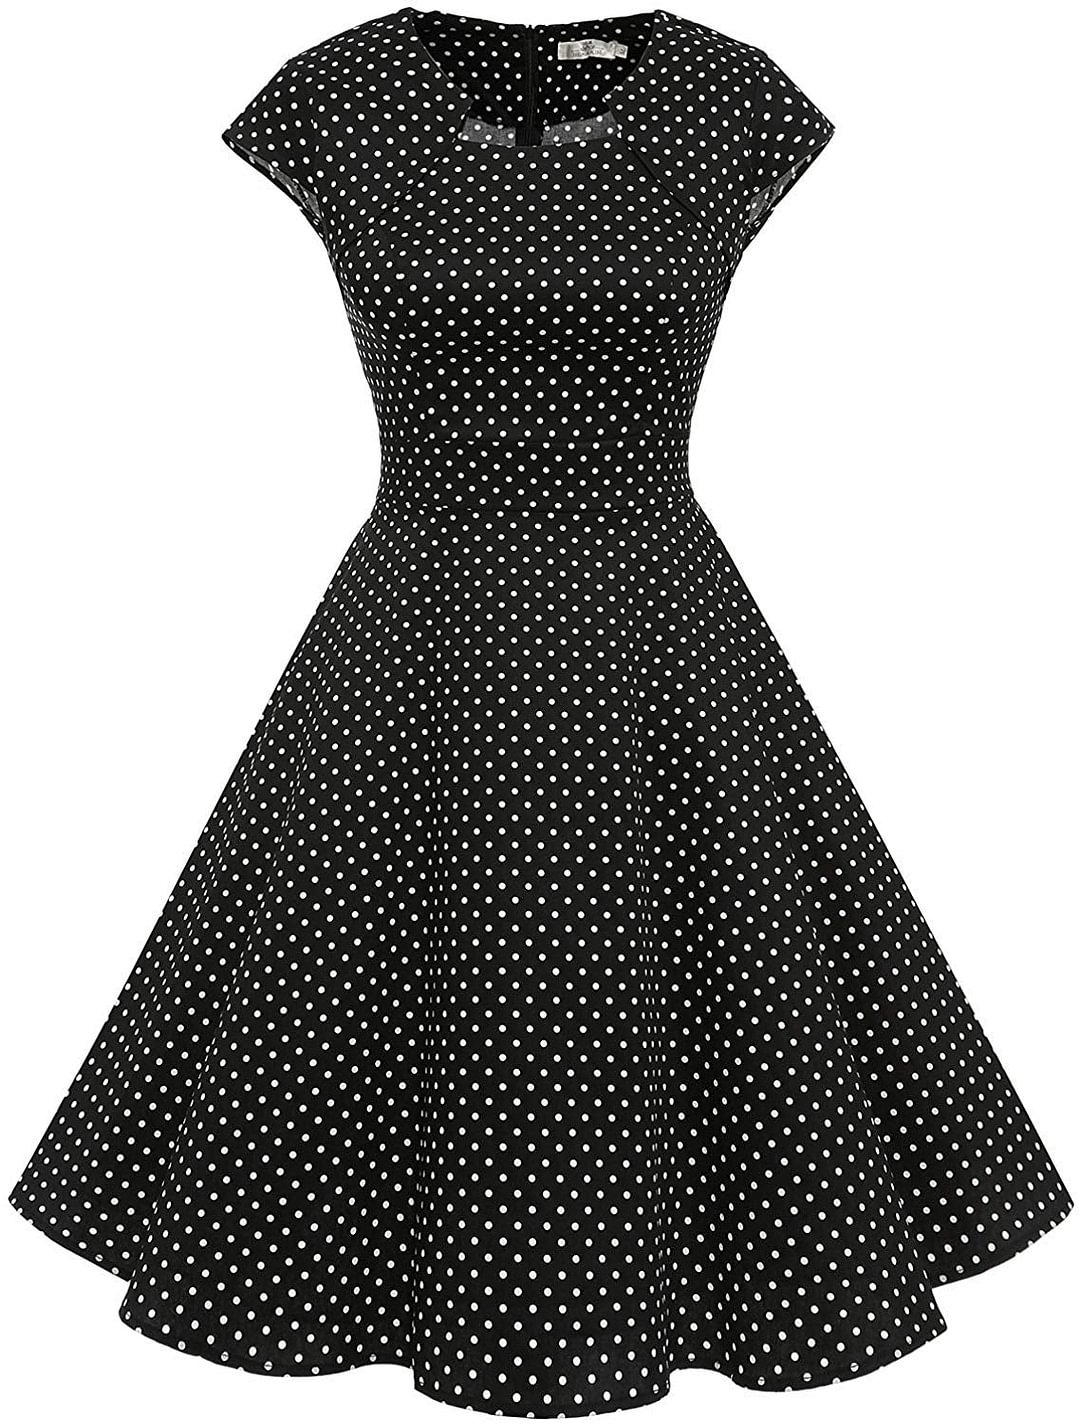 Women's 1950s Retro Vintage A-Line Cap Sleeve Cocktail Swing Party Dress